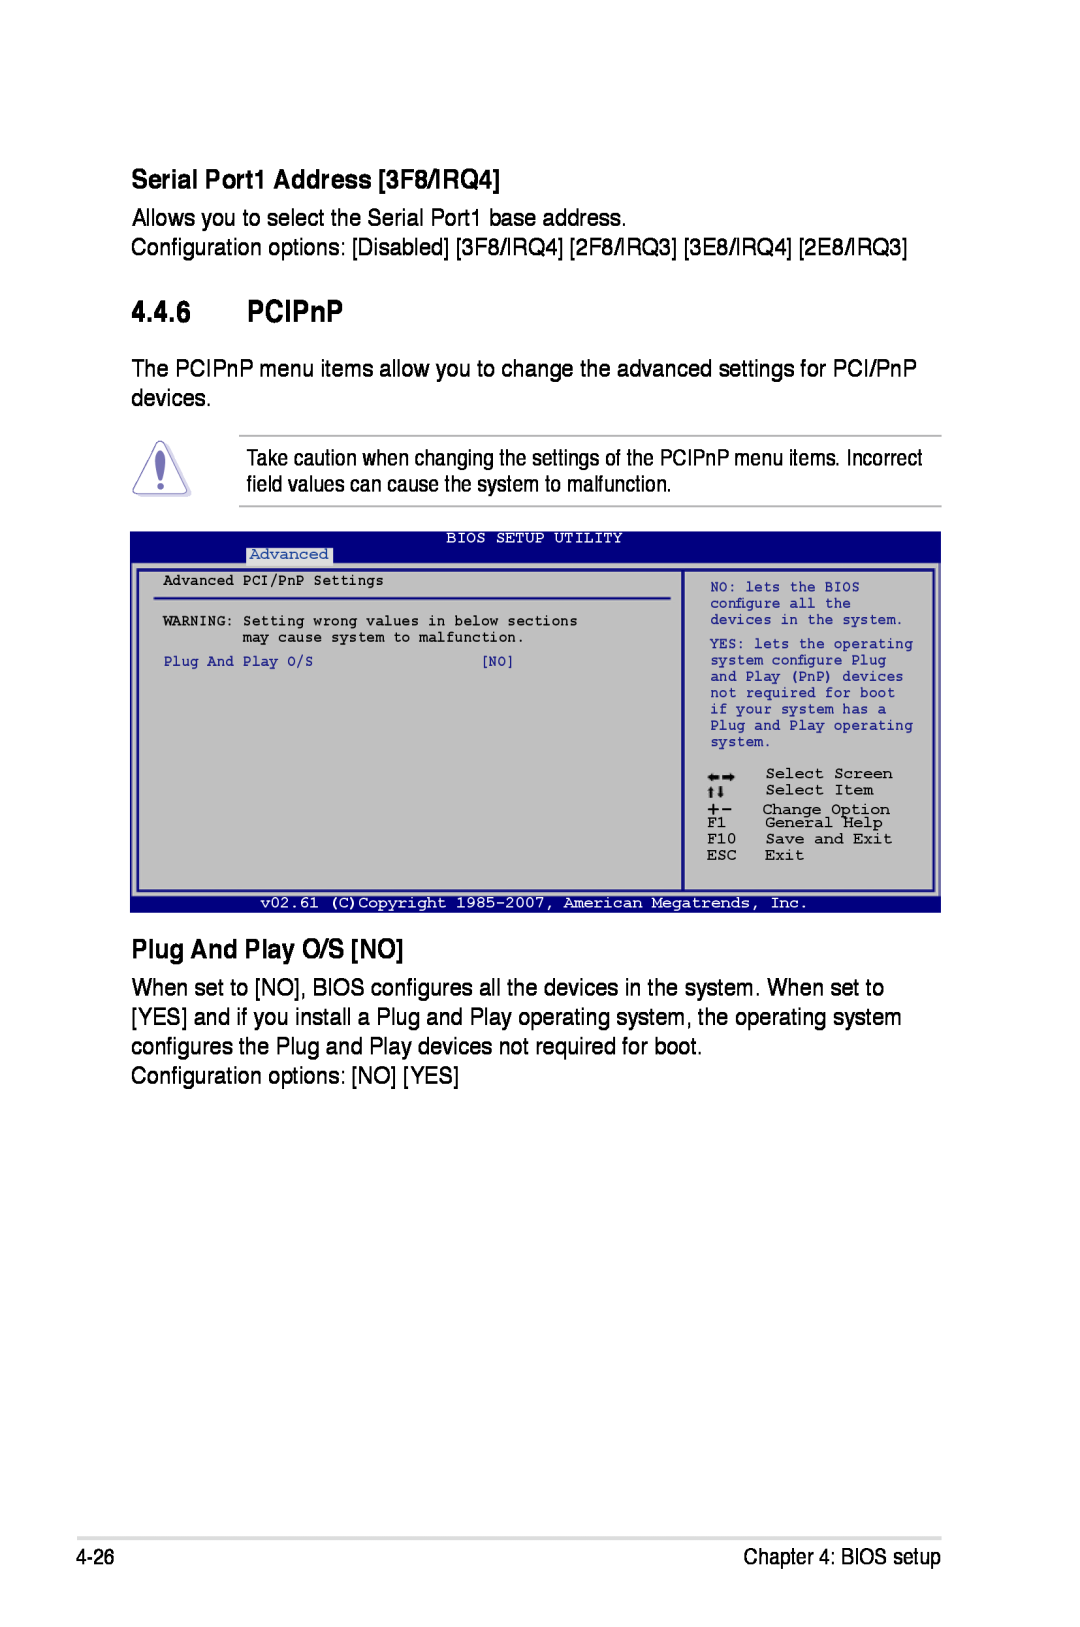 Asus P5K/EPU manual PCIPnP, Serial Port1 Address 3F8/IRQ4, Plug And Play O/S NO 